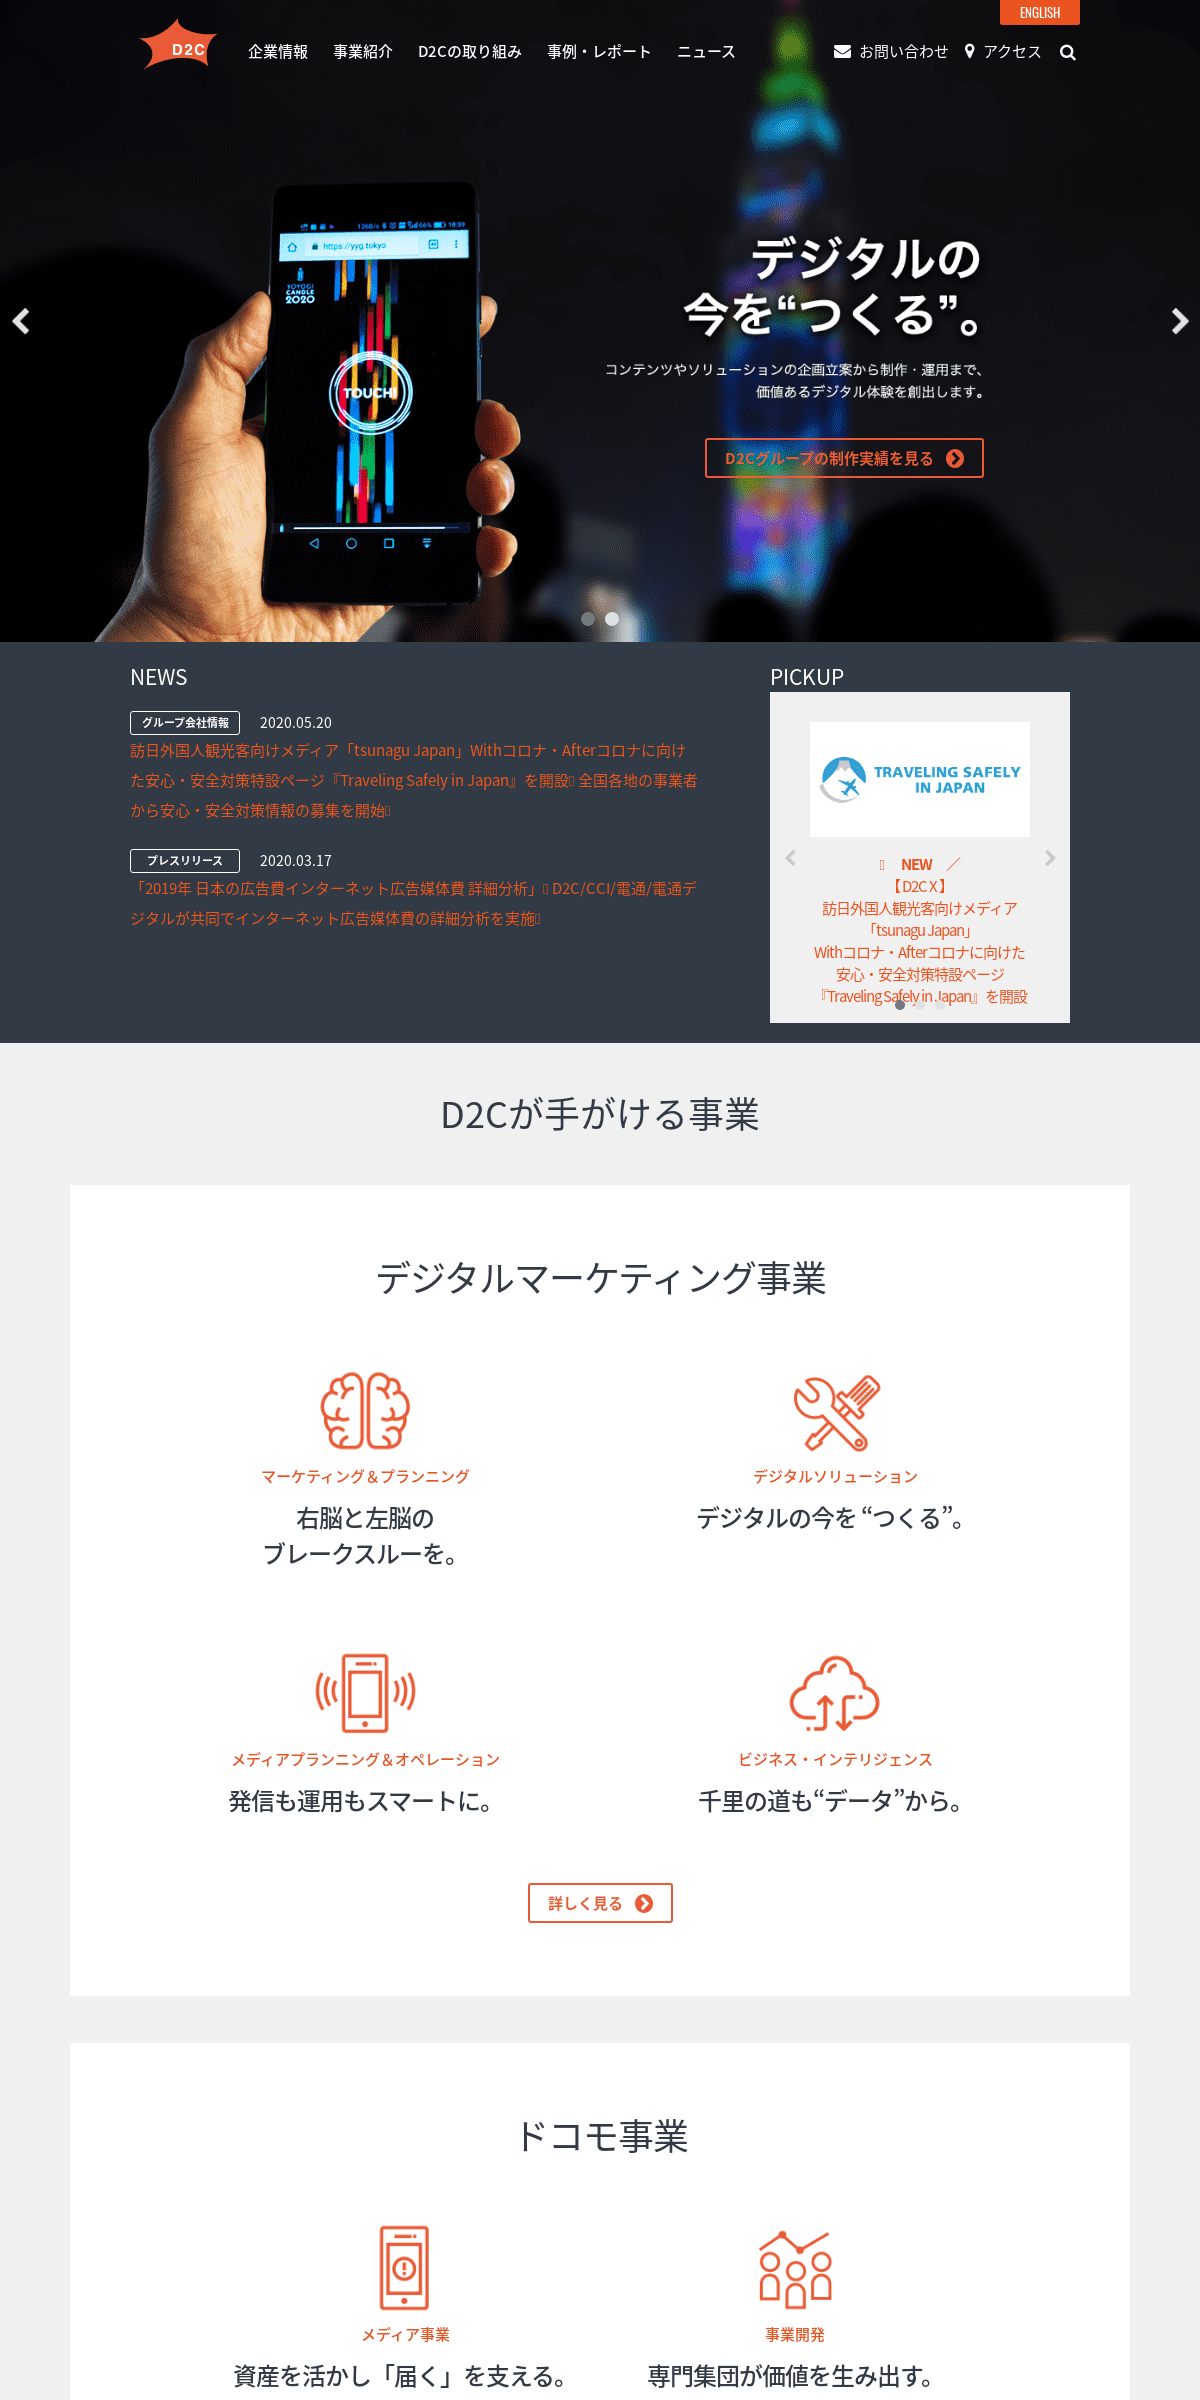 A complete backup of d2c.co.jp